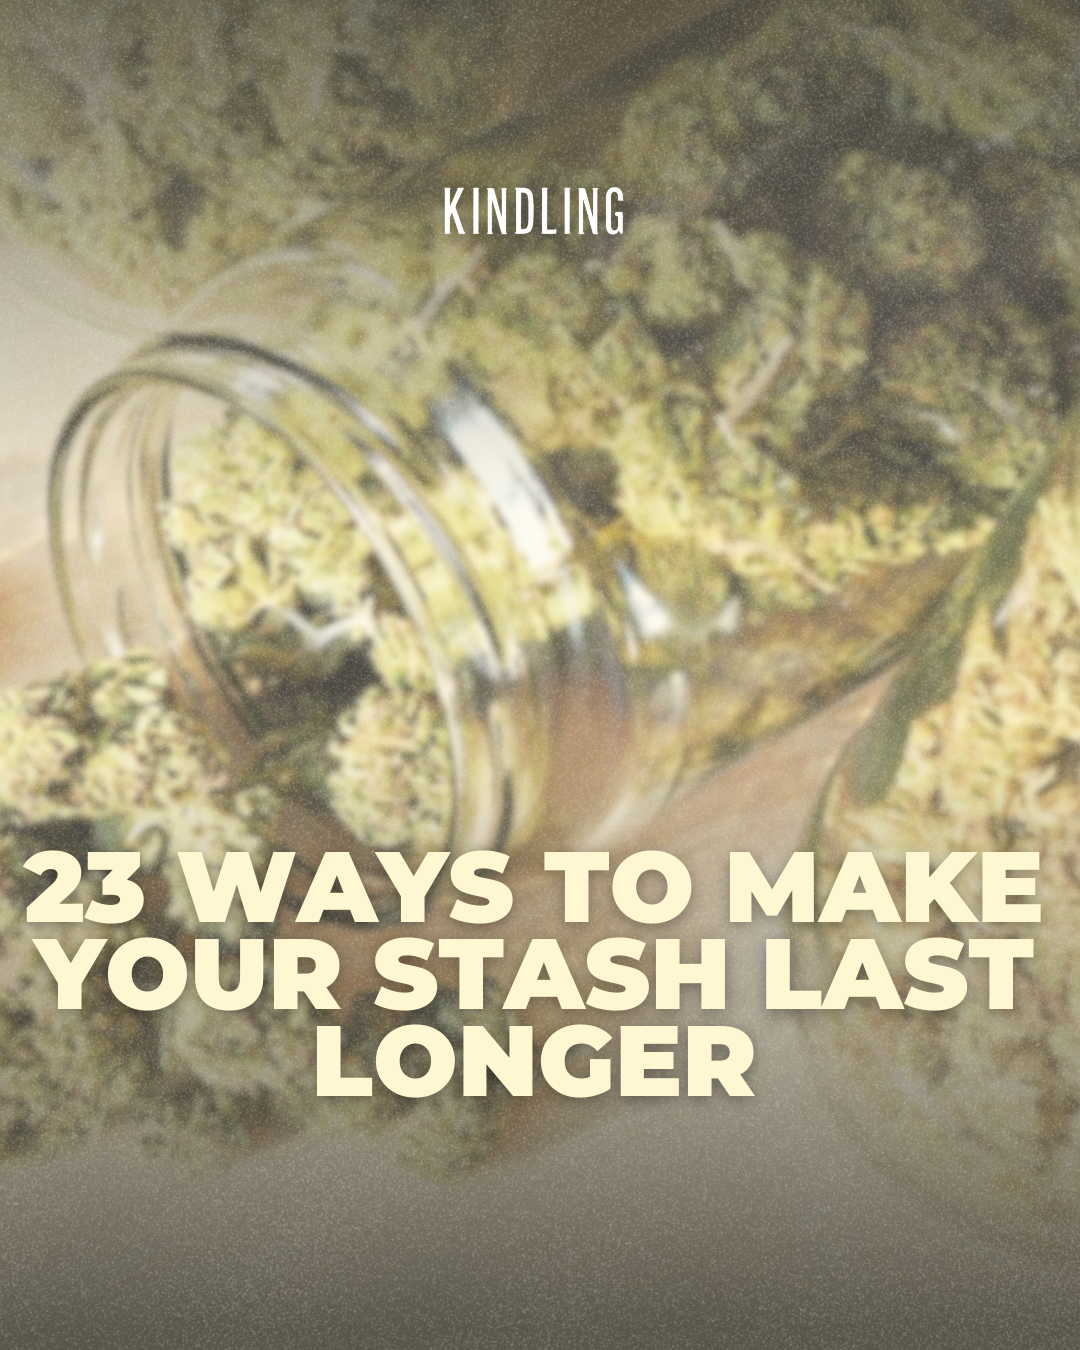 23 Savvy Ways to Make Your Cannabis Stash Last Longer